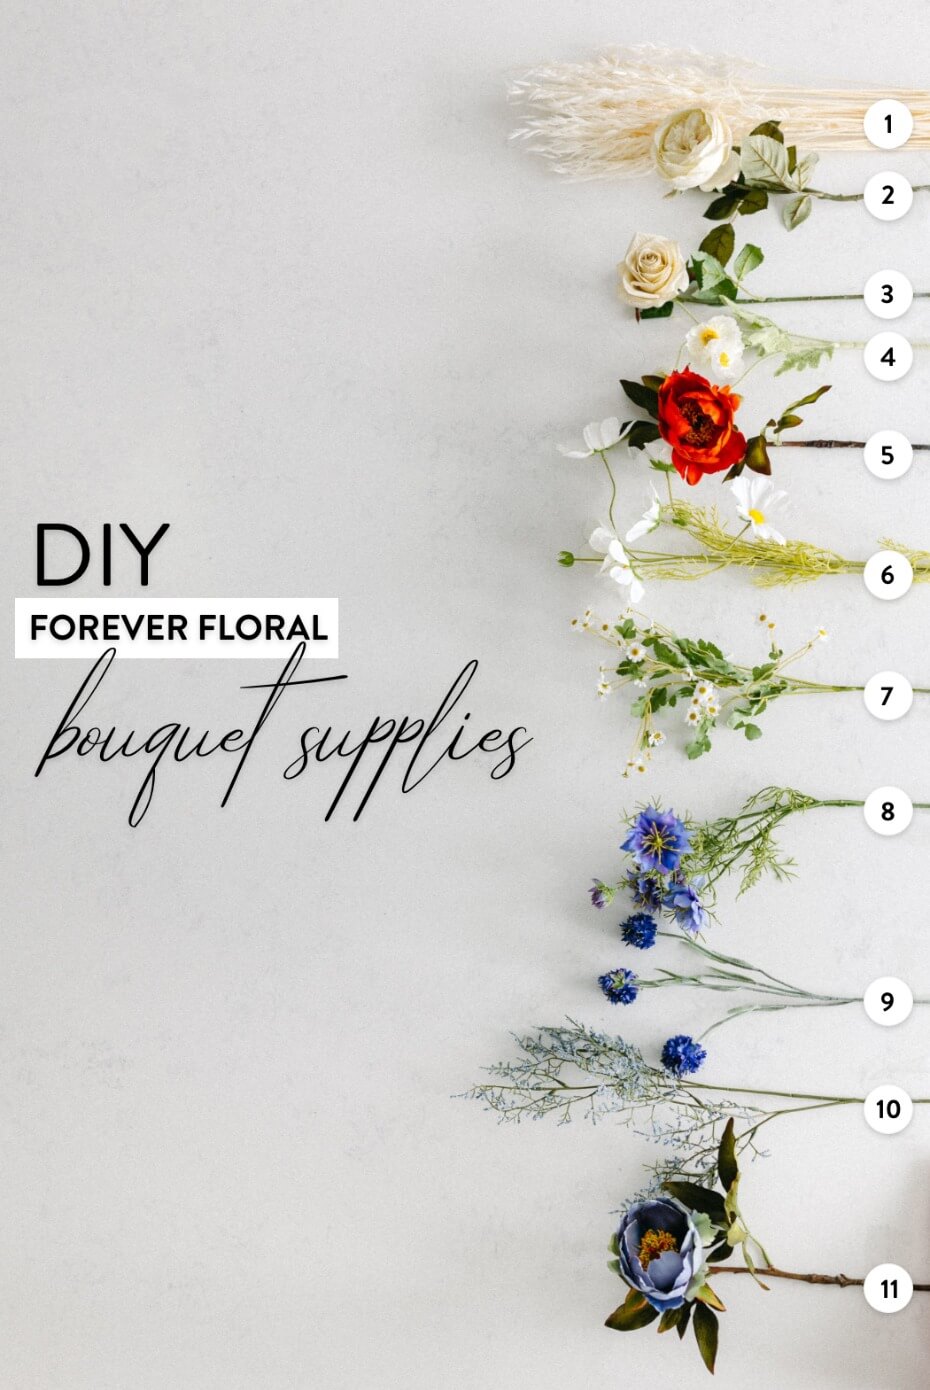 DIY forever floral bouquet supplies